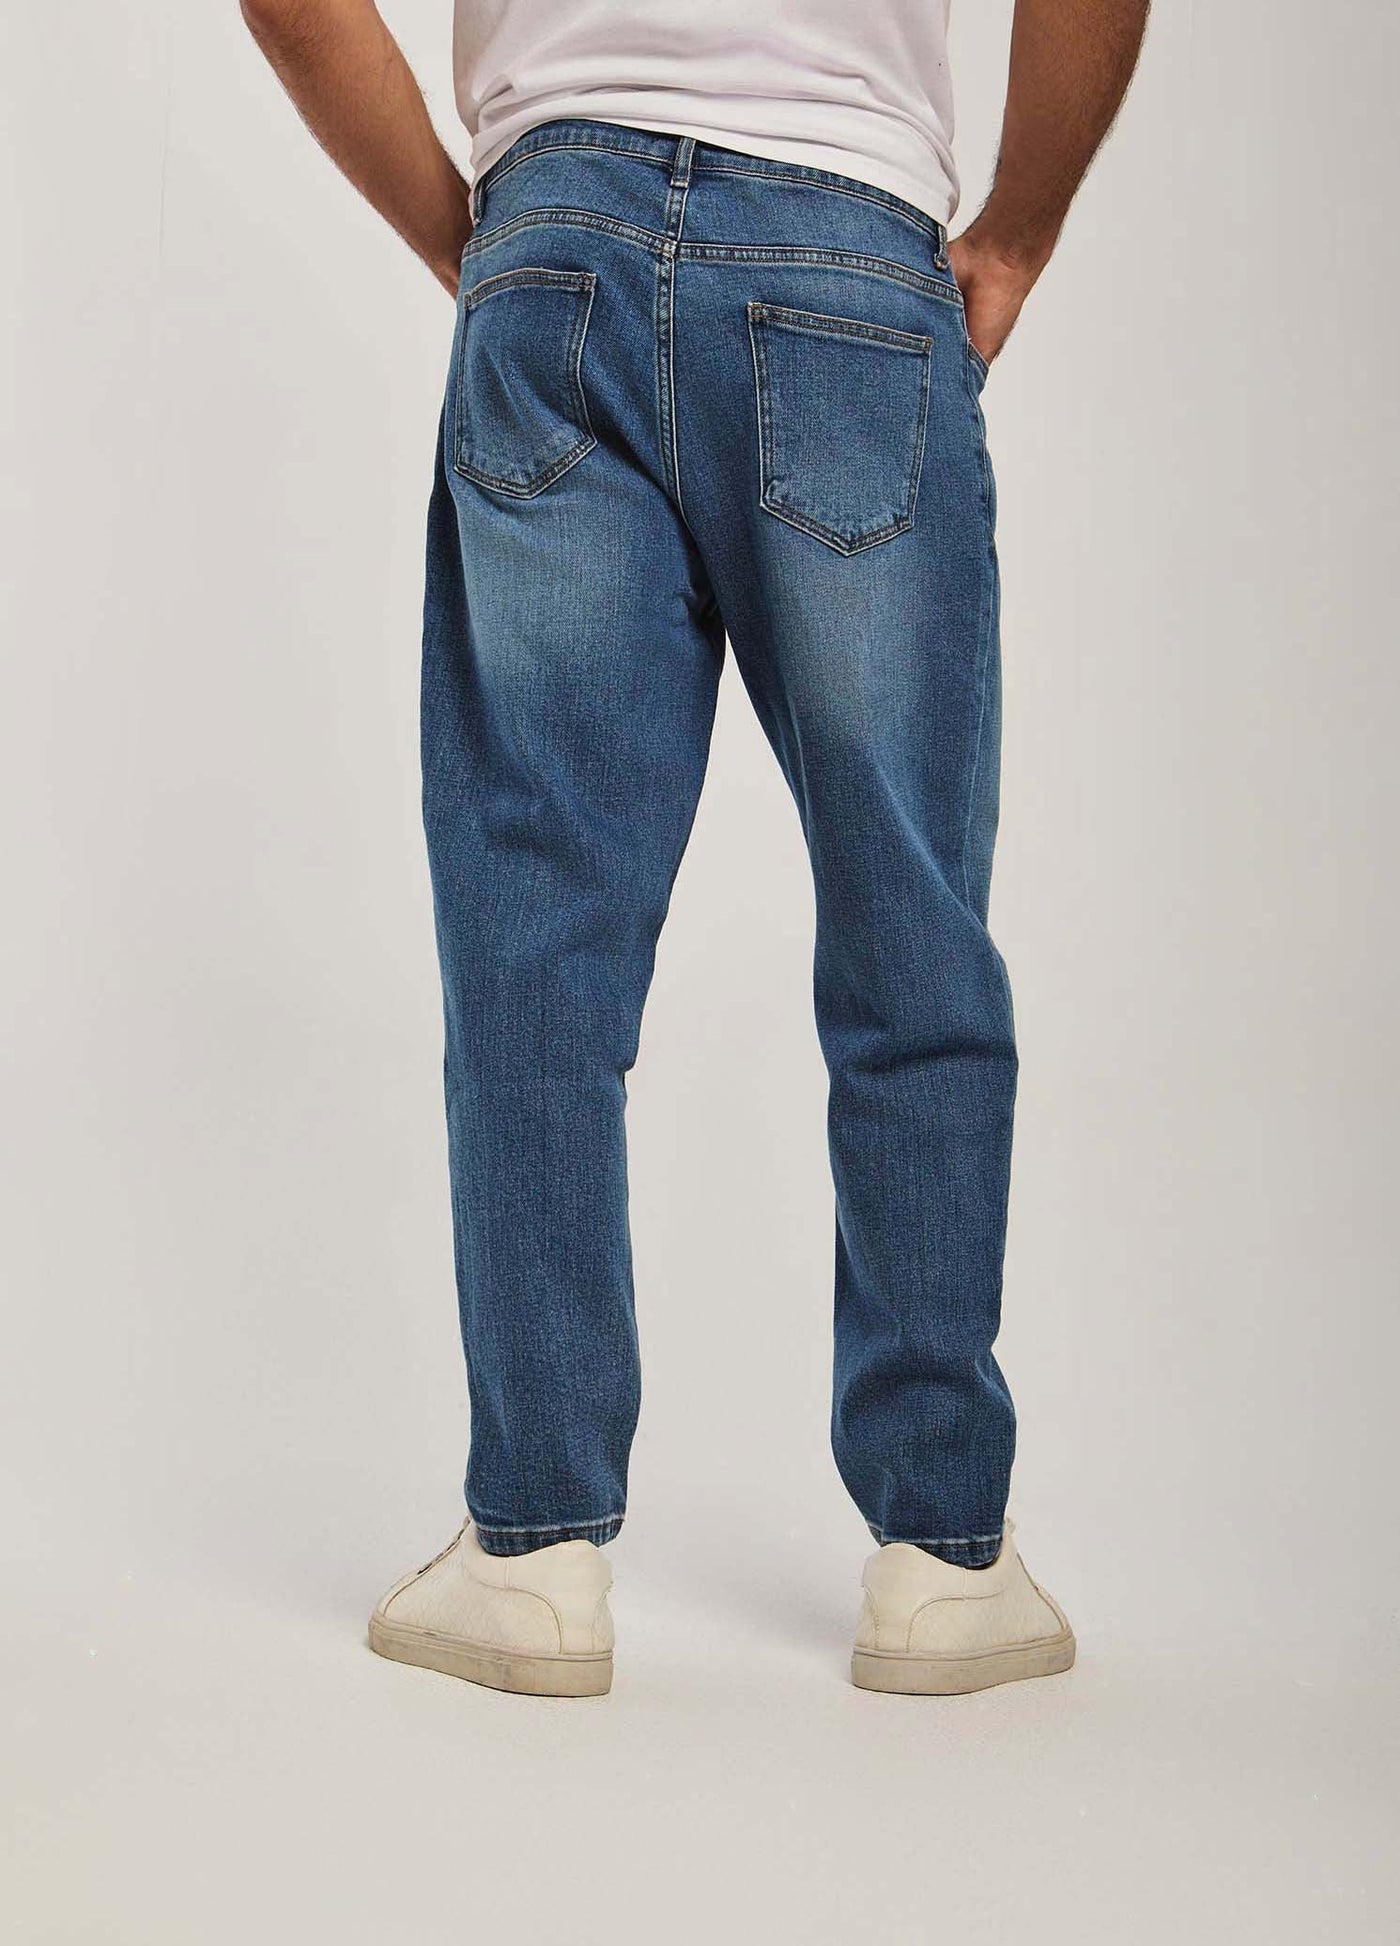 Denim Pants - Regular Fit - With Pockets